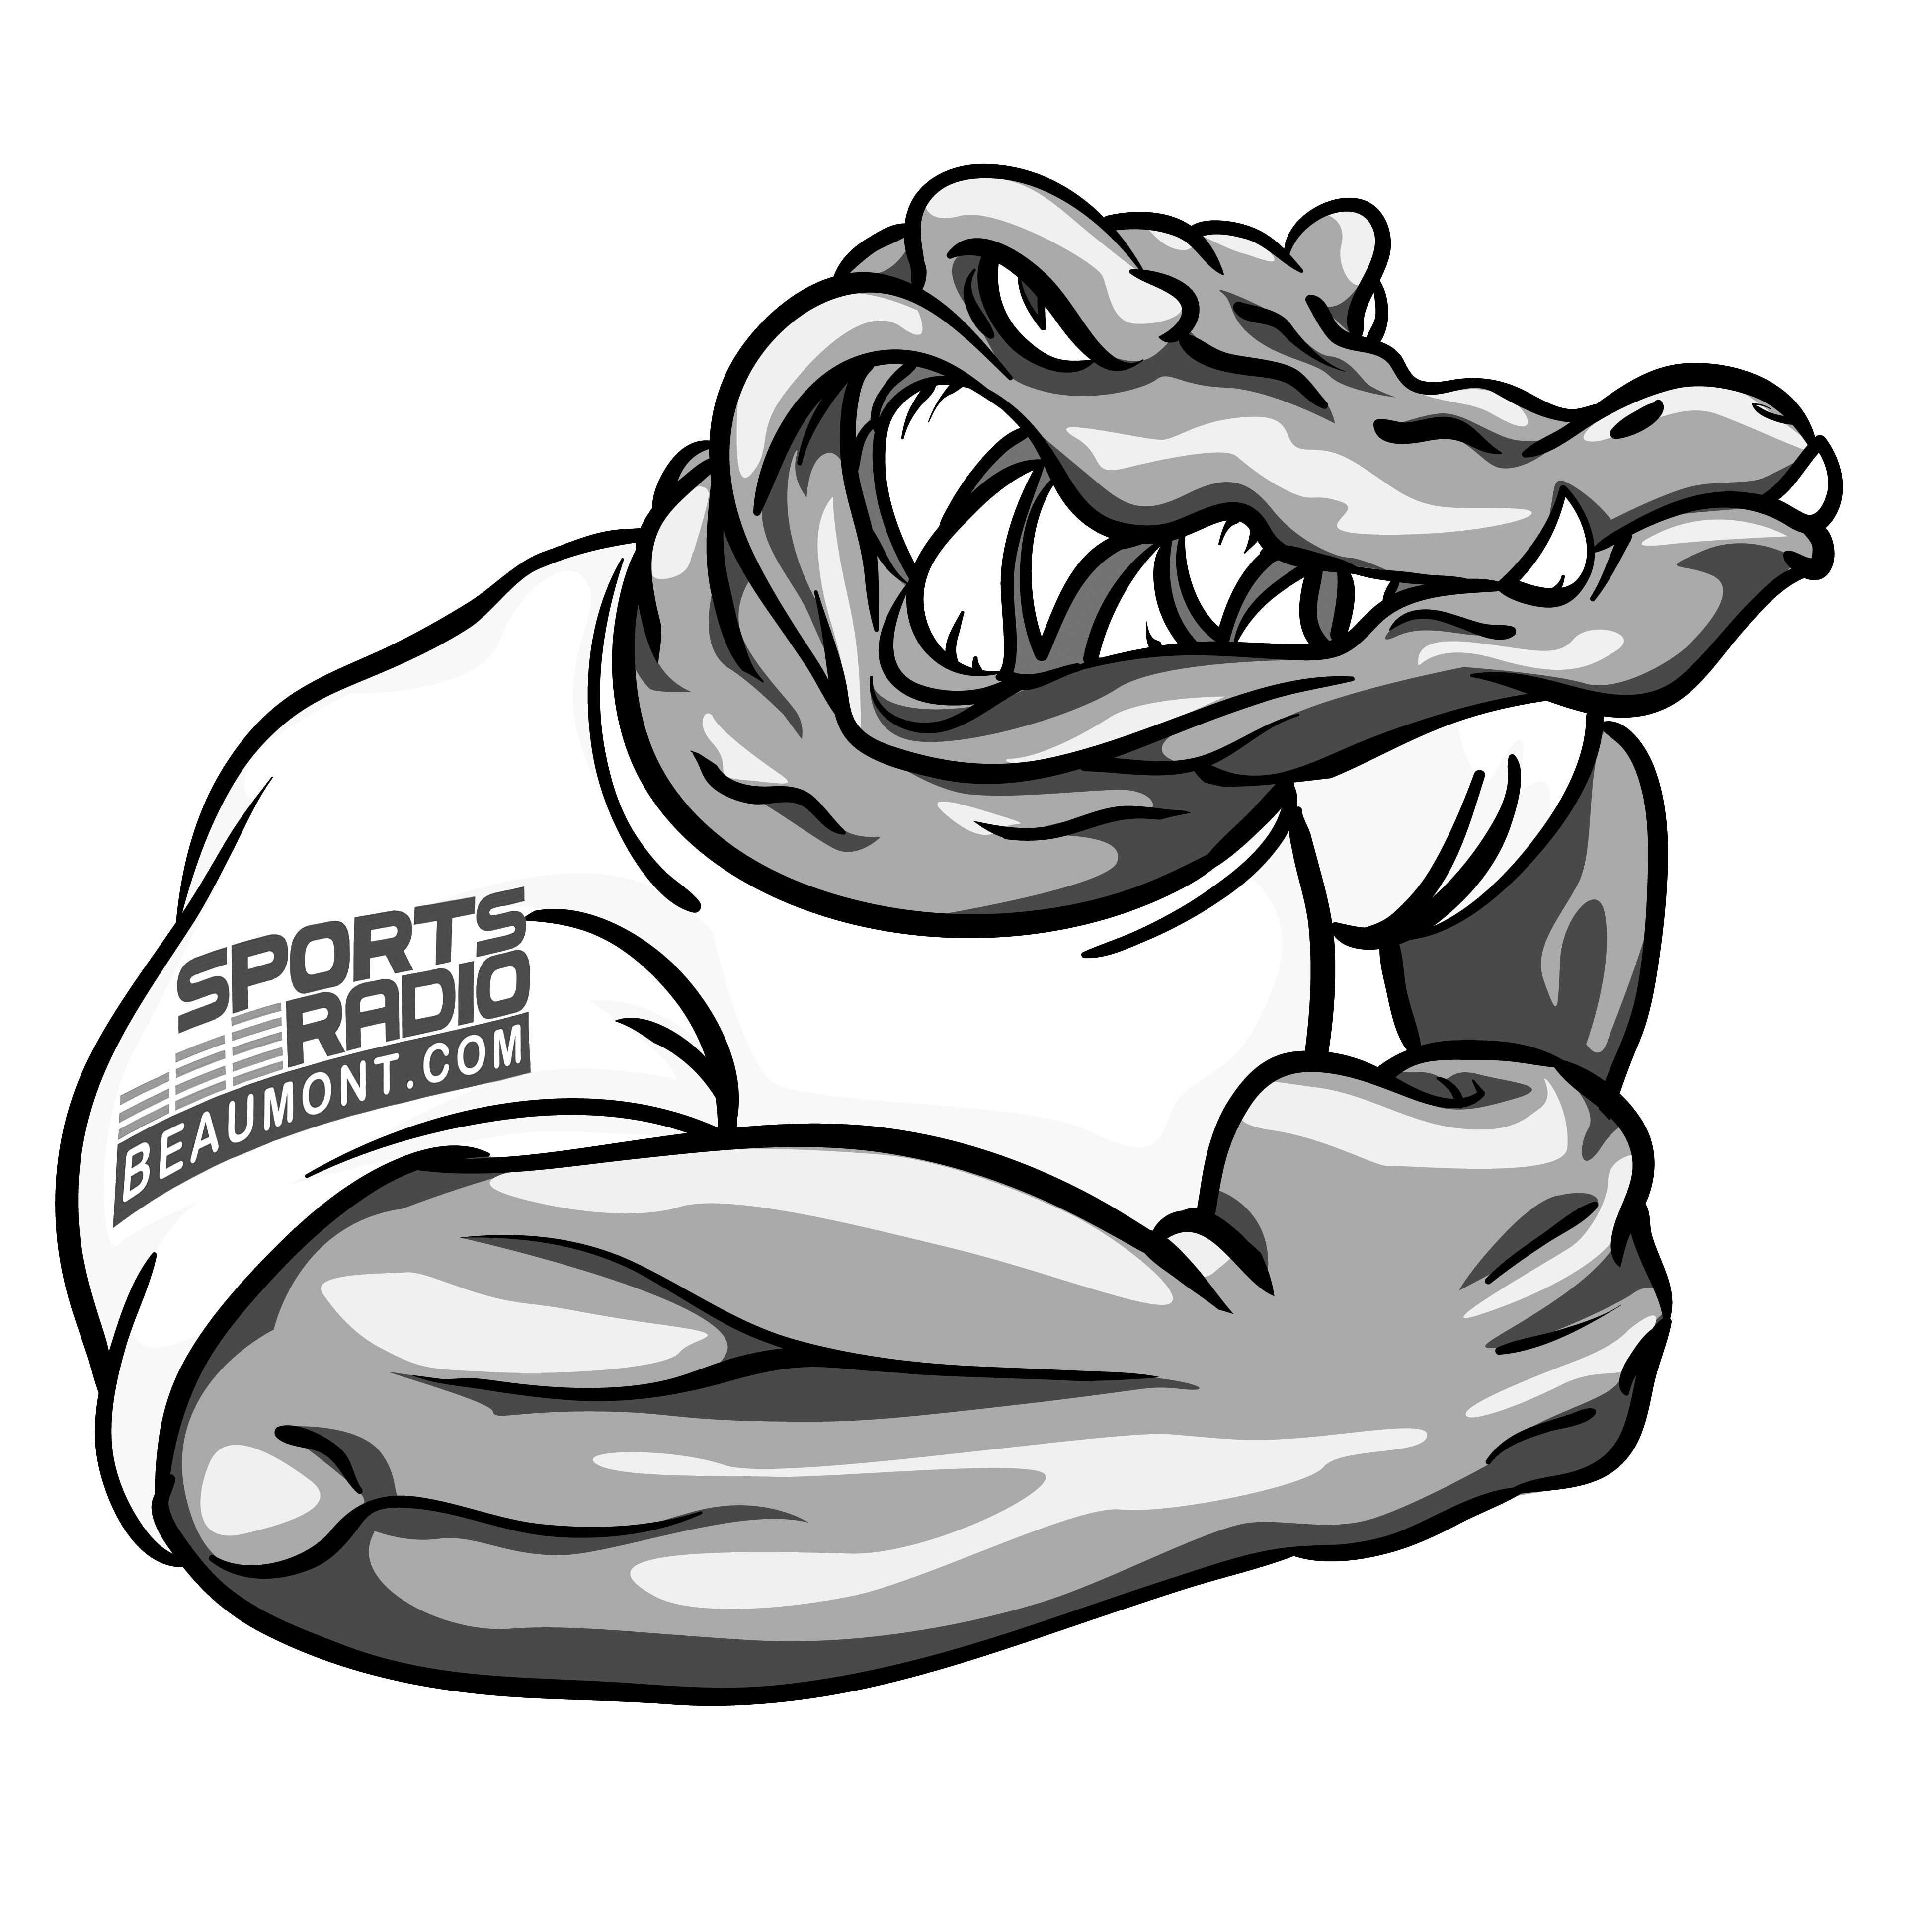 Black and White Gator Logo - Game Day Gator | Sports Radio Beaumont KIKR-AM 1450/1510